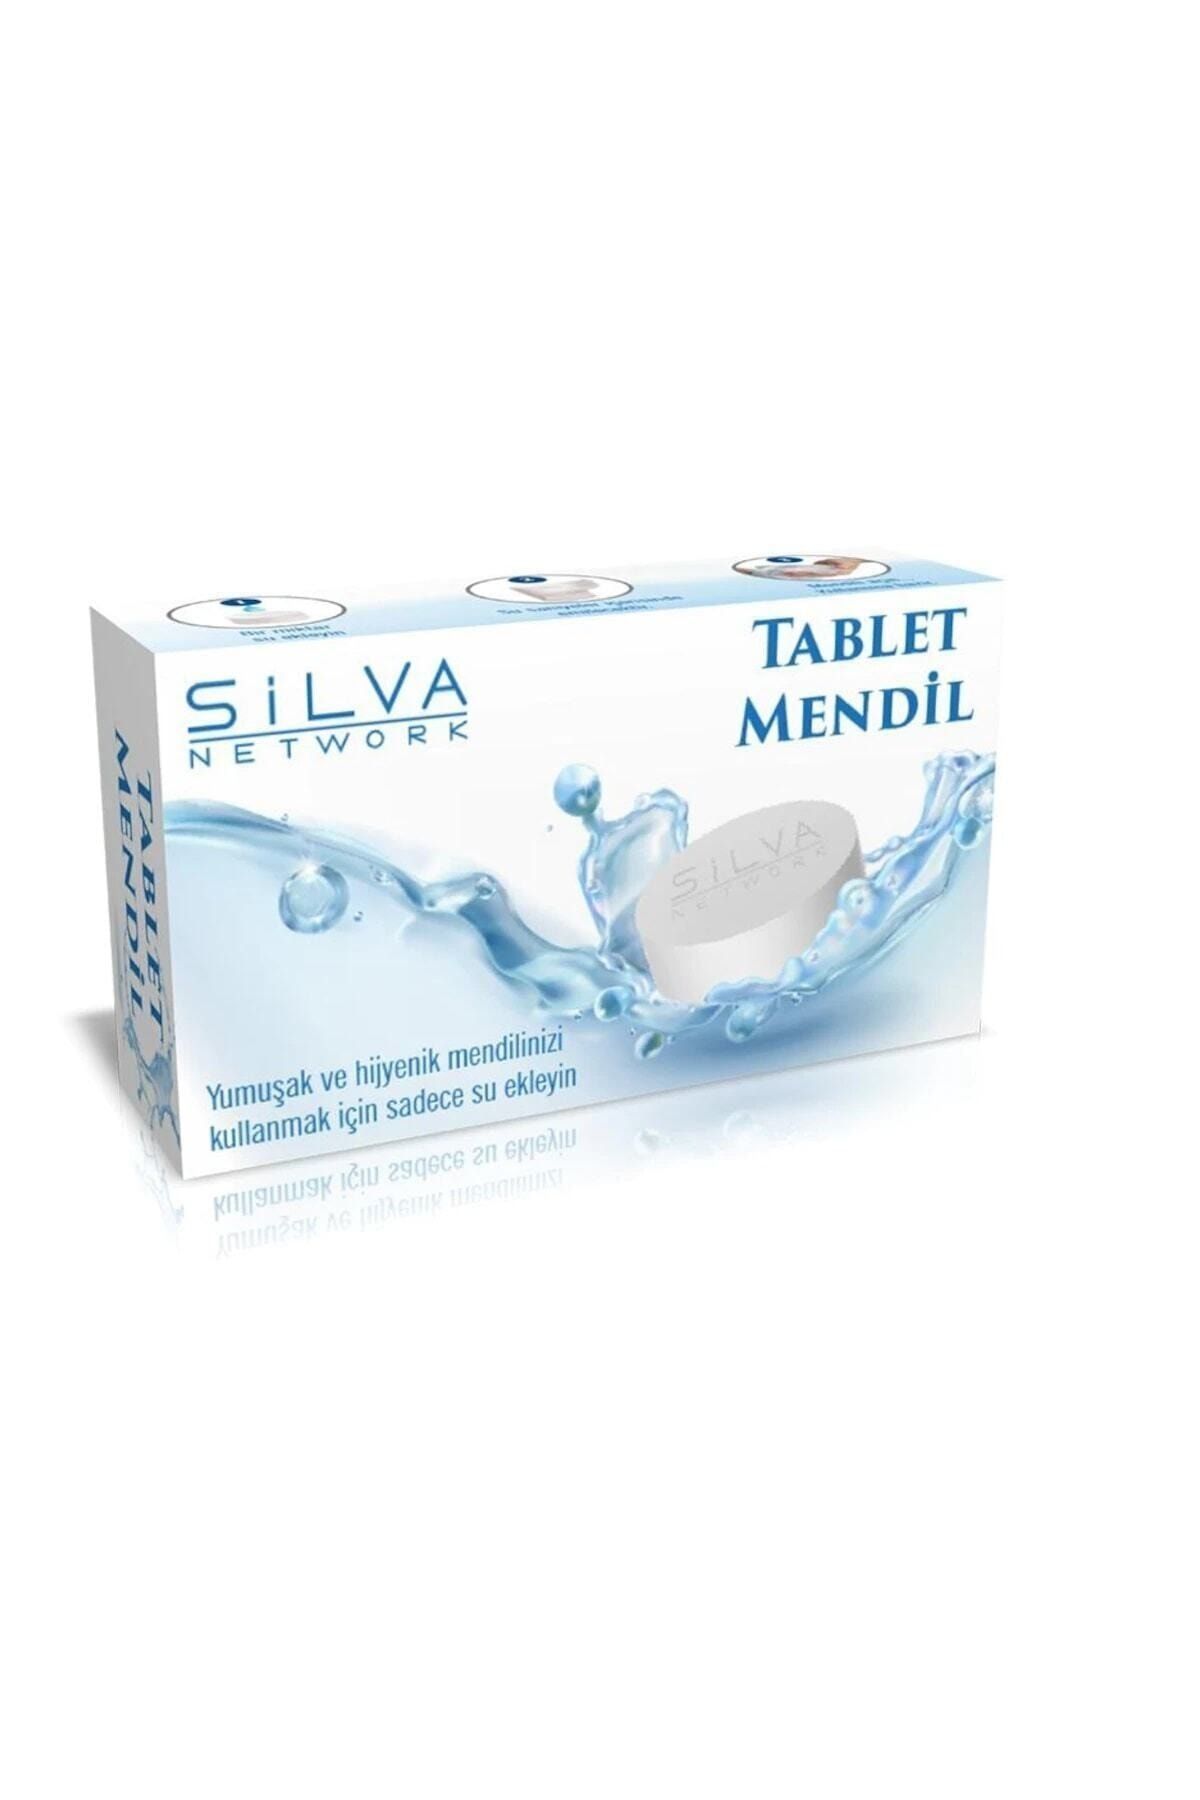 Silva Tablet Mendil (50'li)